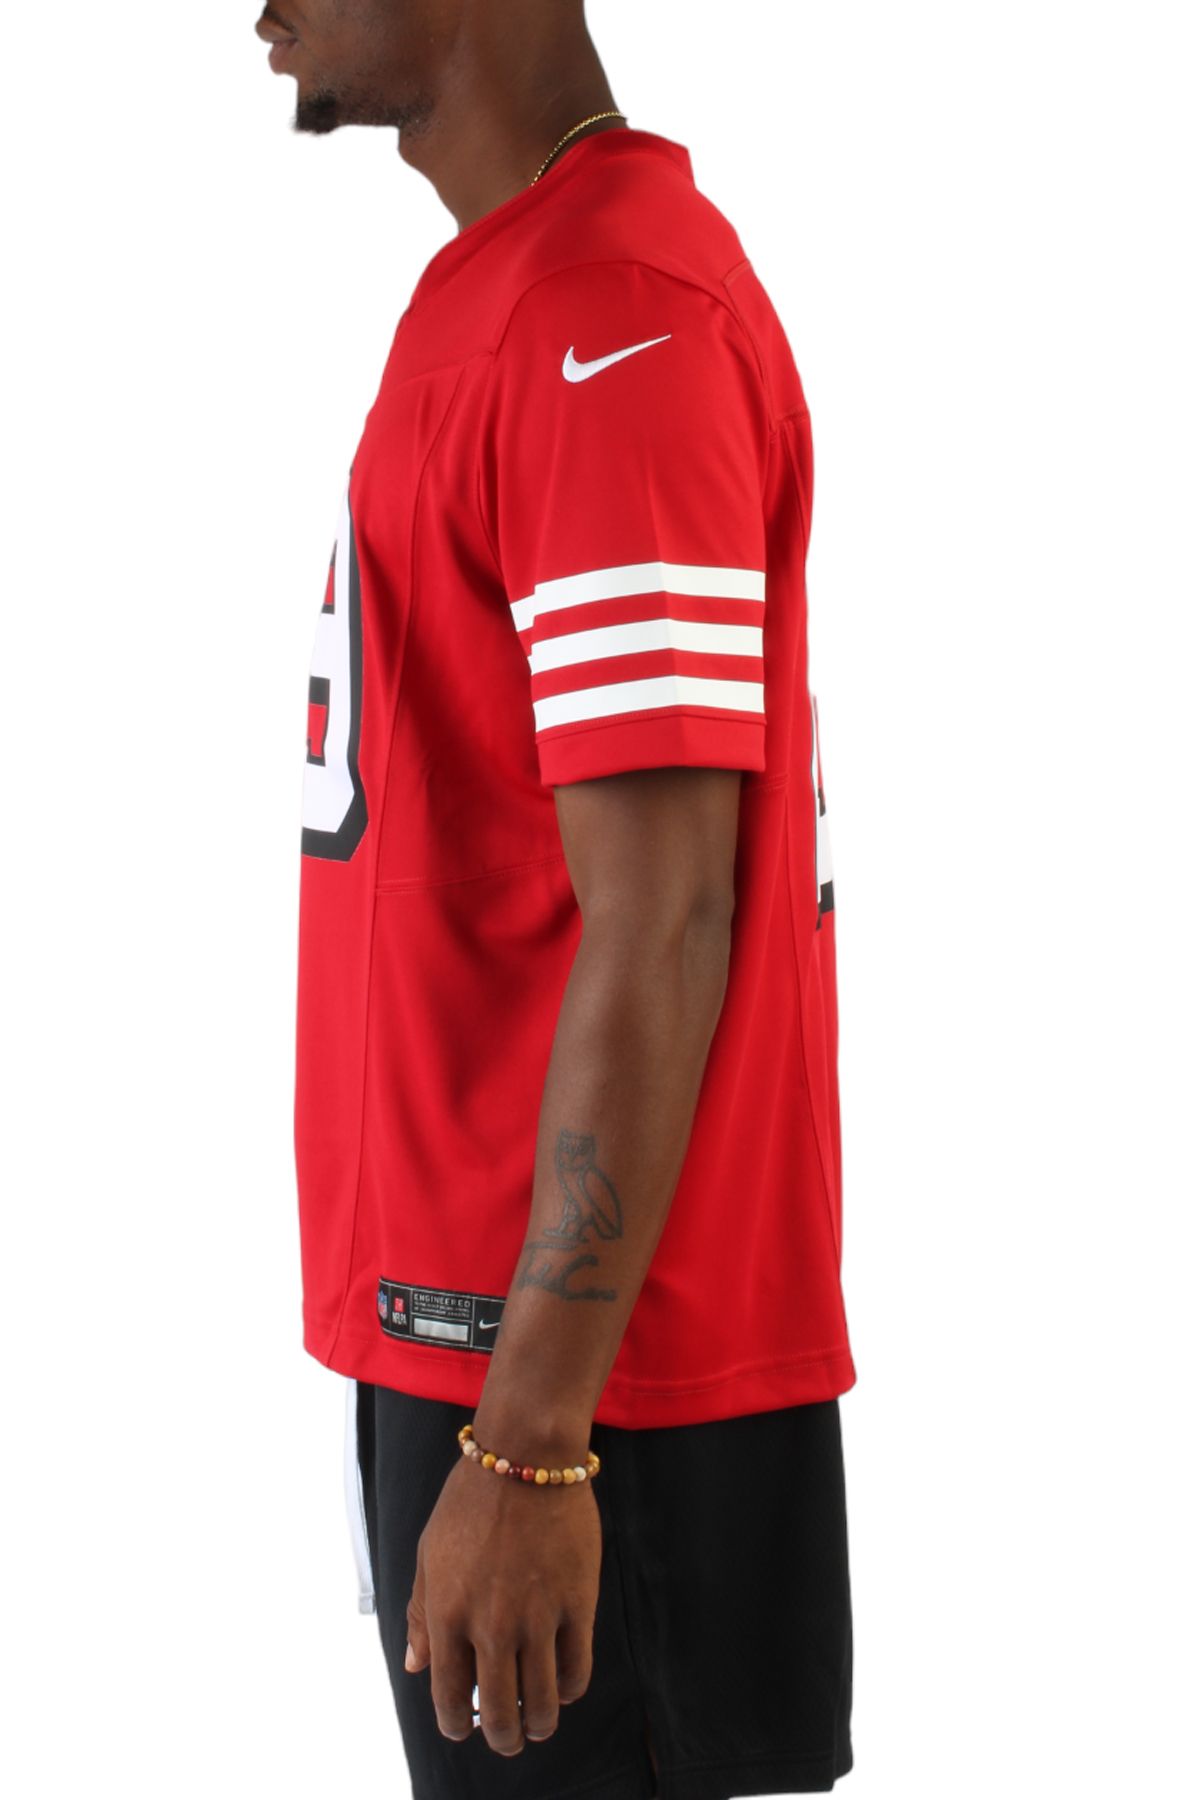 Deebo Samuel San Francisco 49ers Men's Nike Dri-FIT NFL Limited Football  Jersey